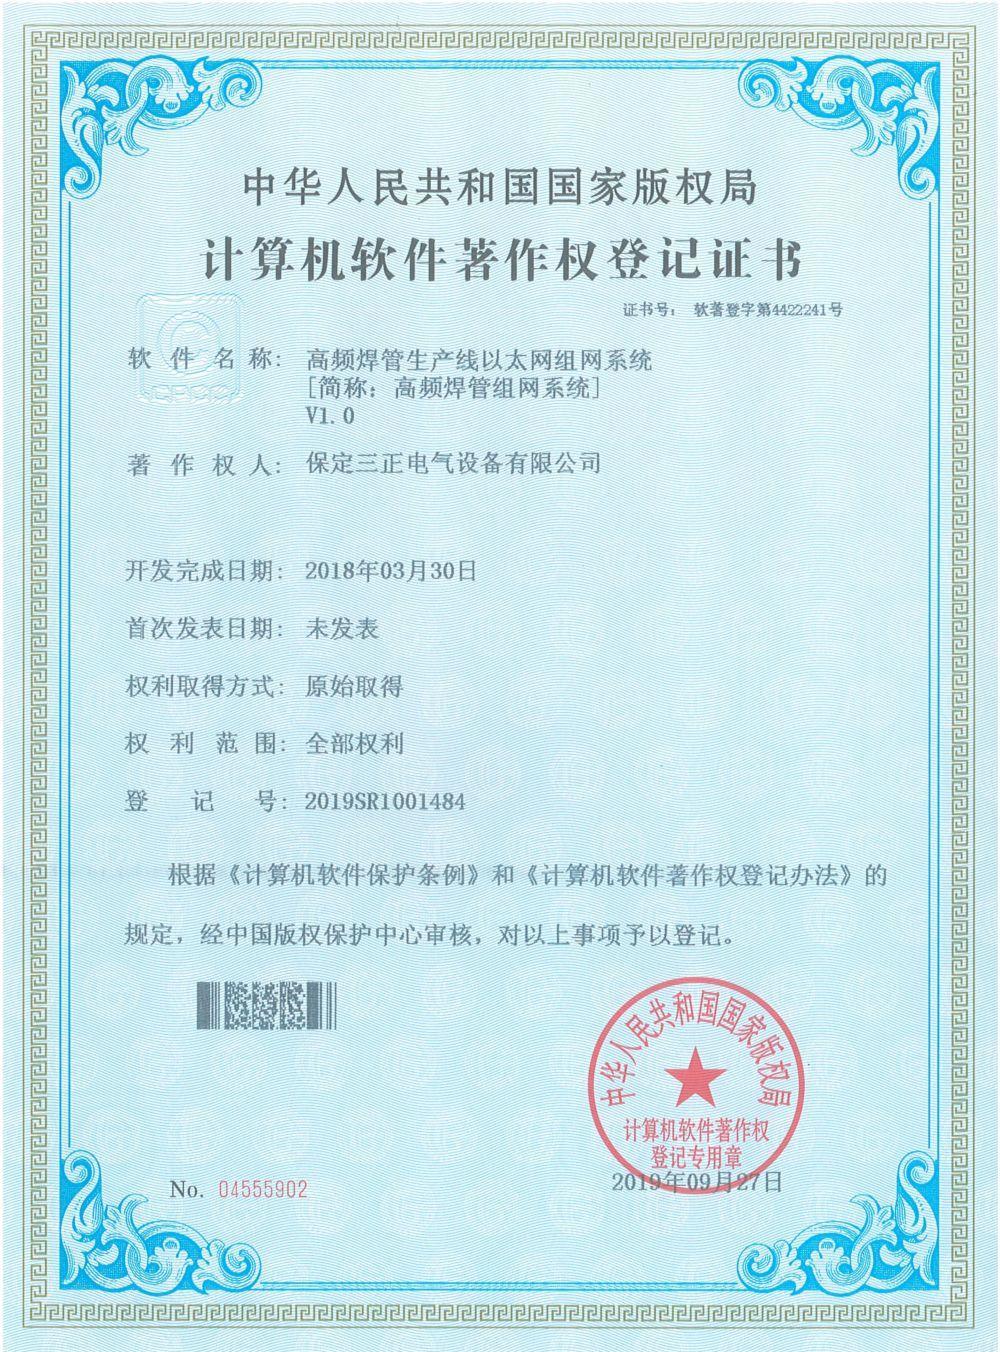 Software certificate